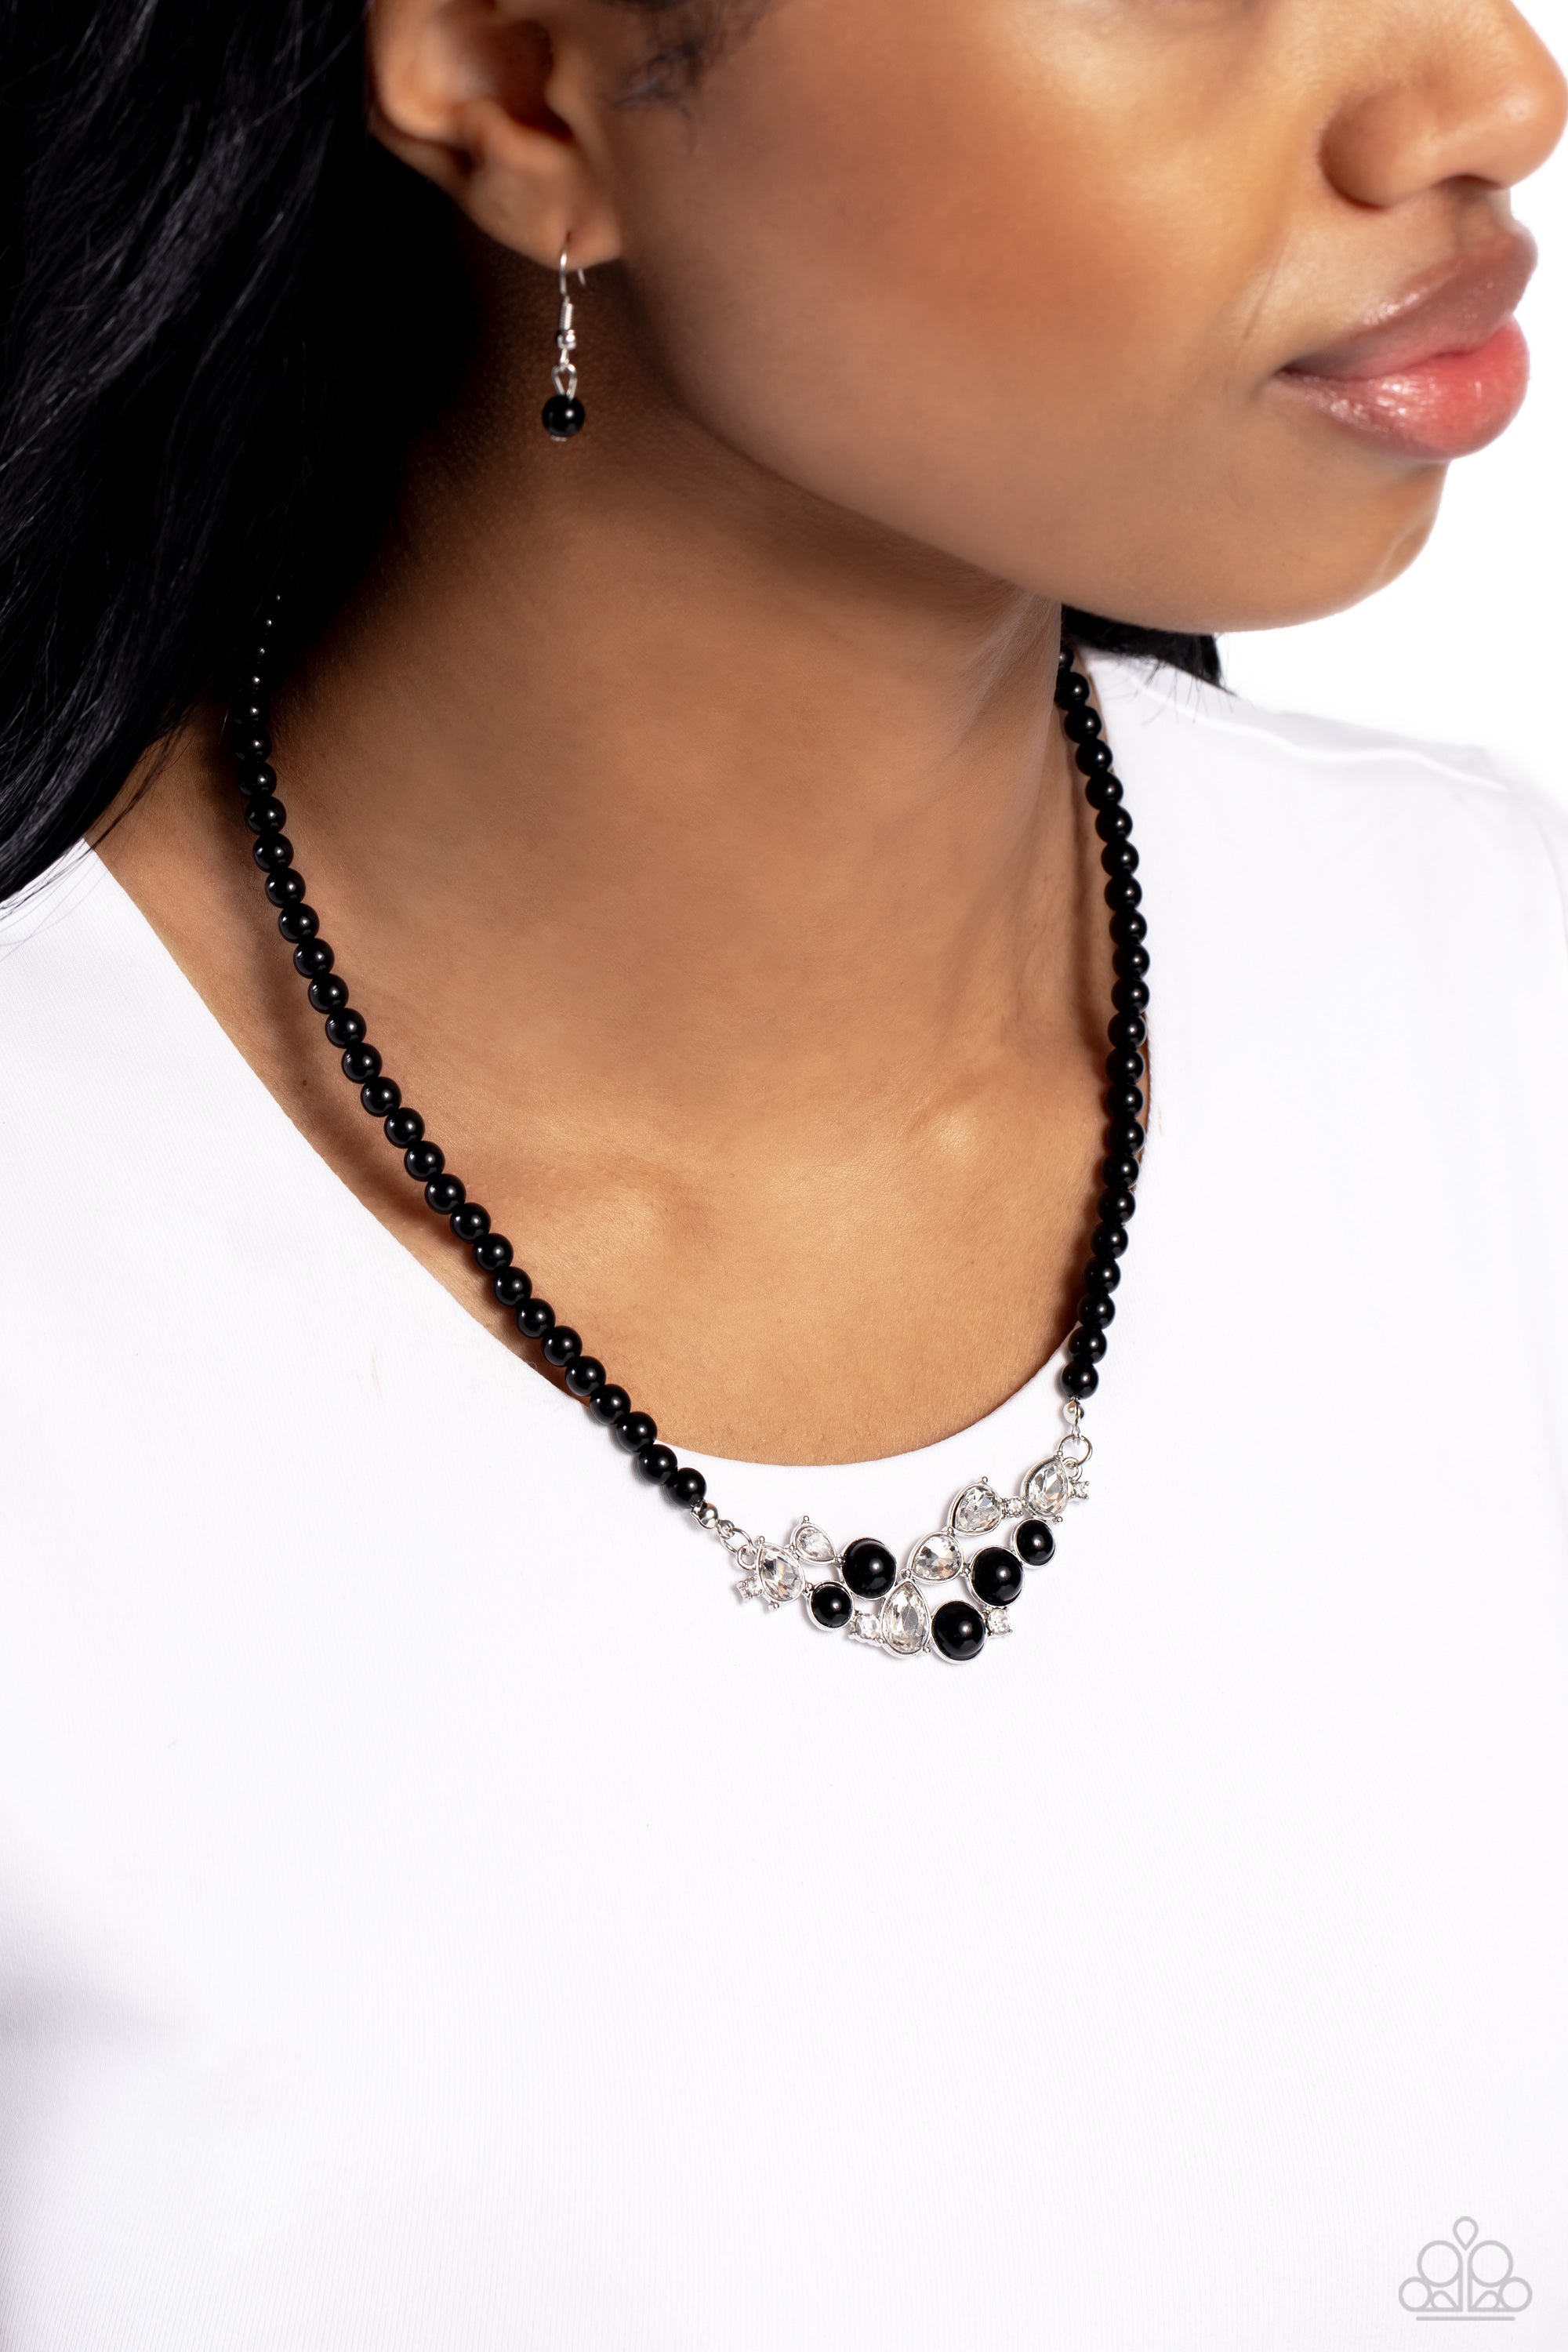 All-Natural Nostalgia - black - Paparazzi necklace – JewelryBlingThing